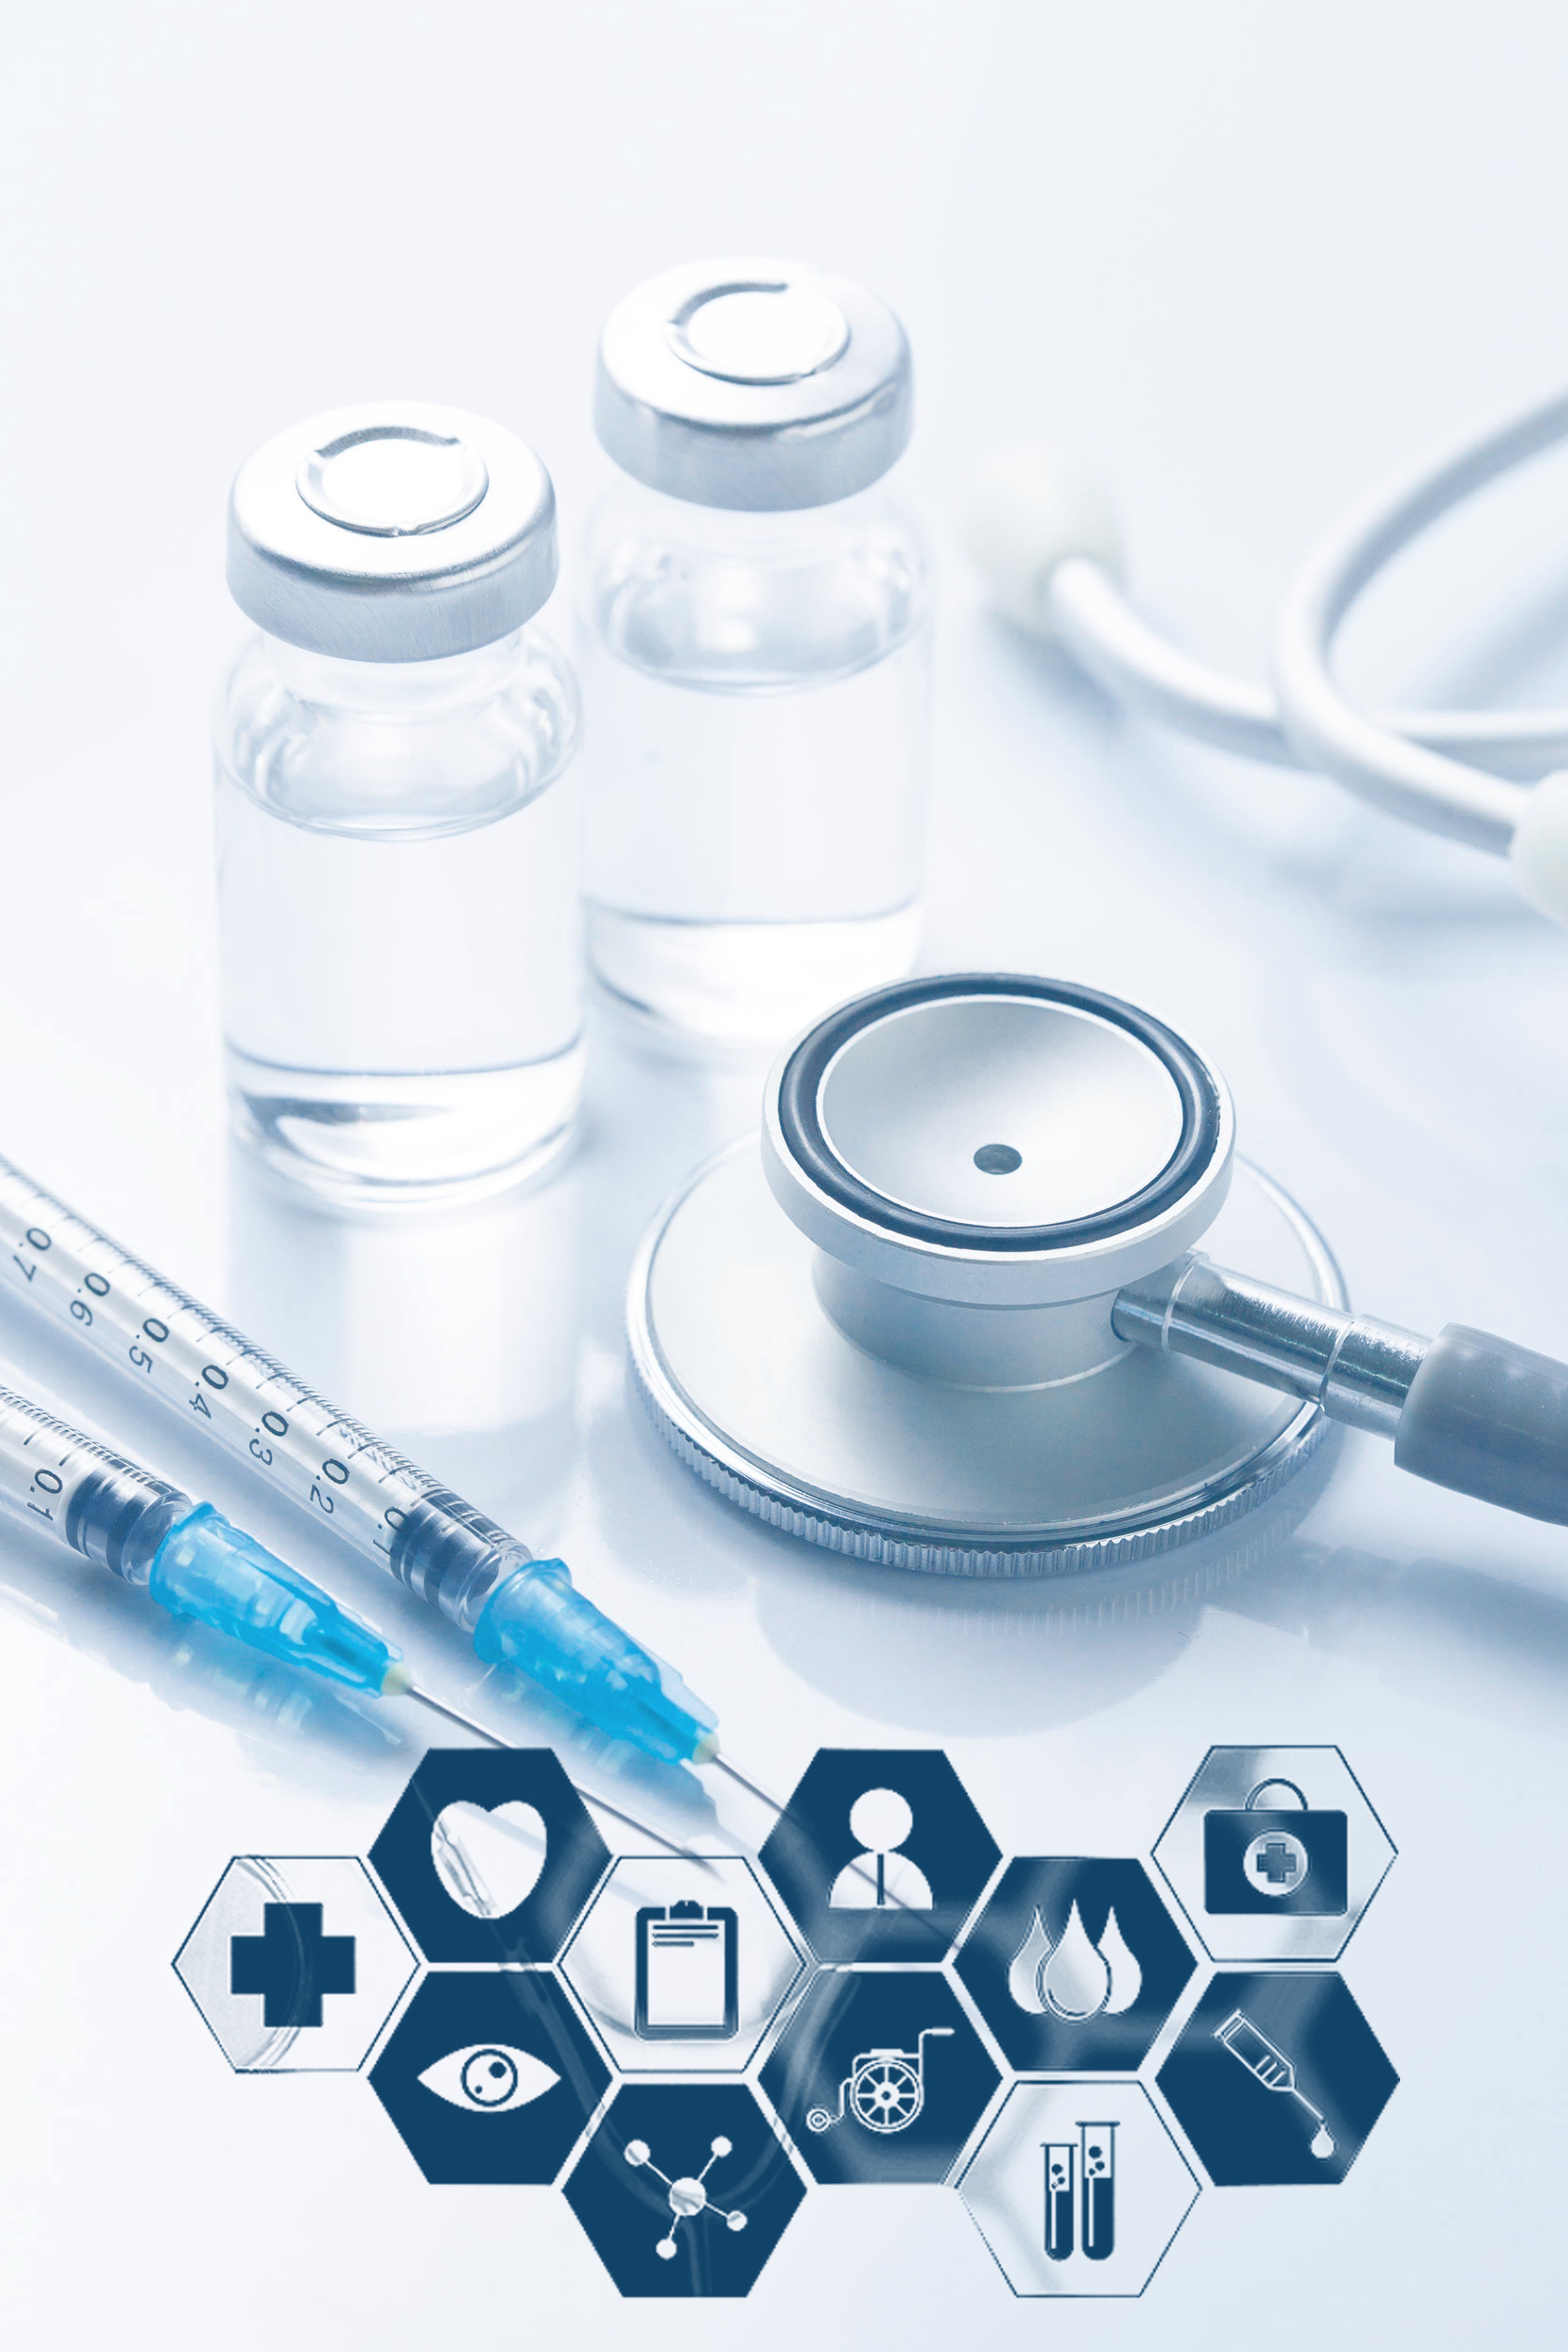 Medical equipment : stethoscope ampoules and syringe on white background